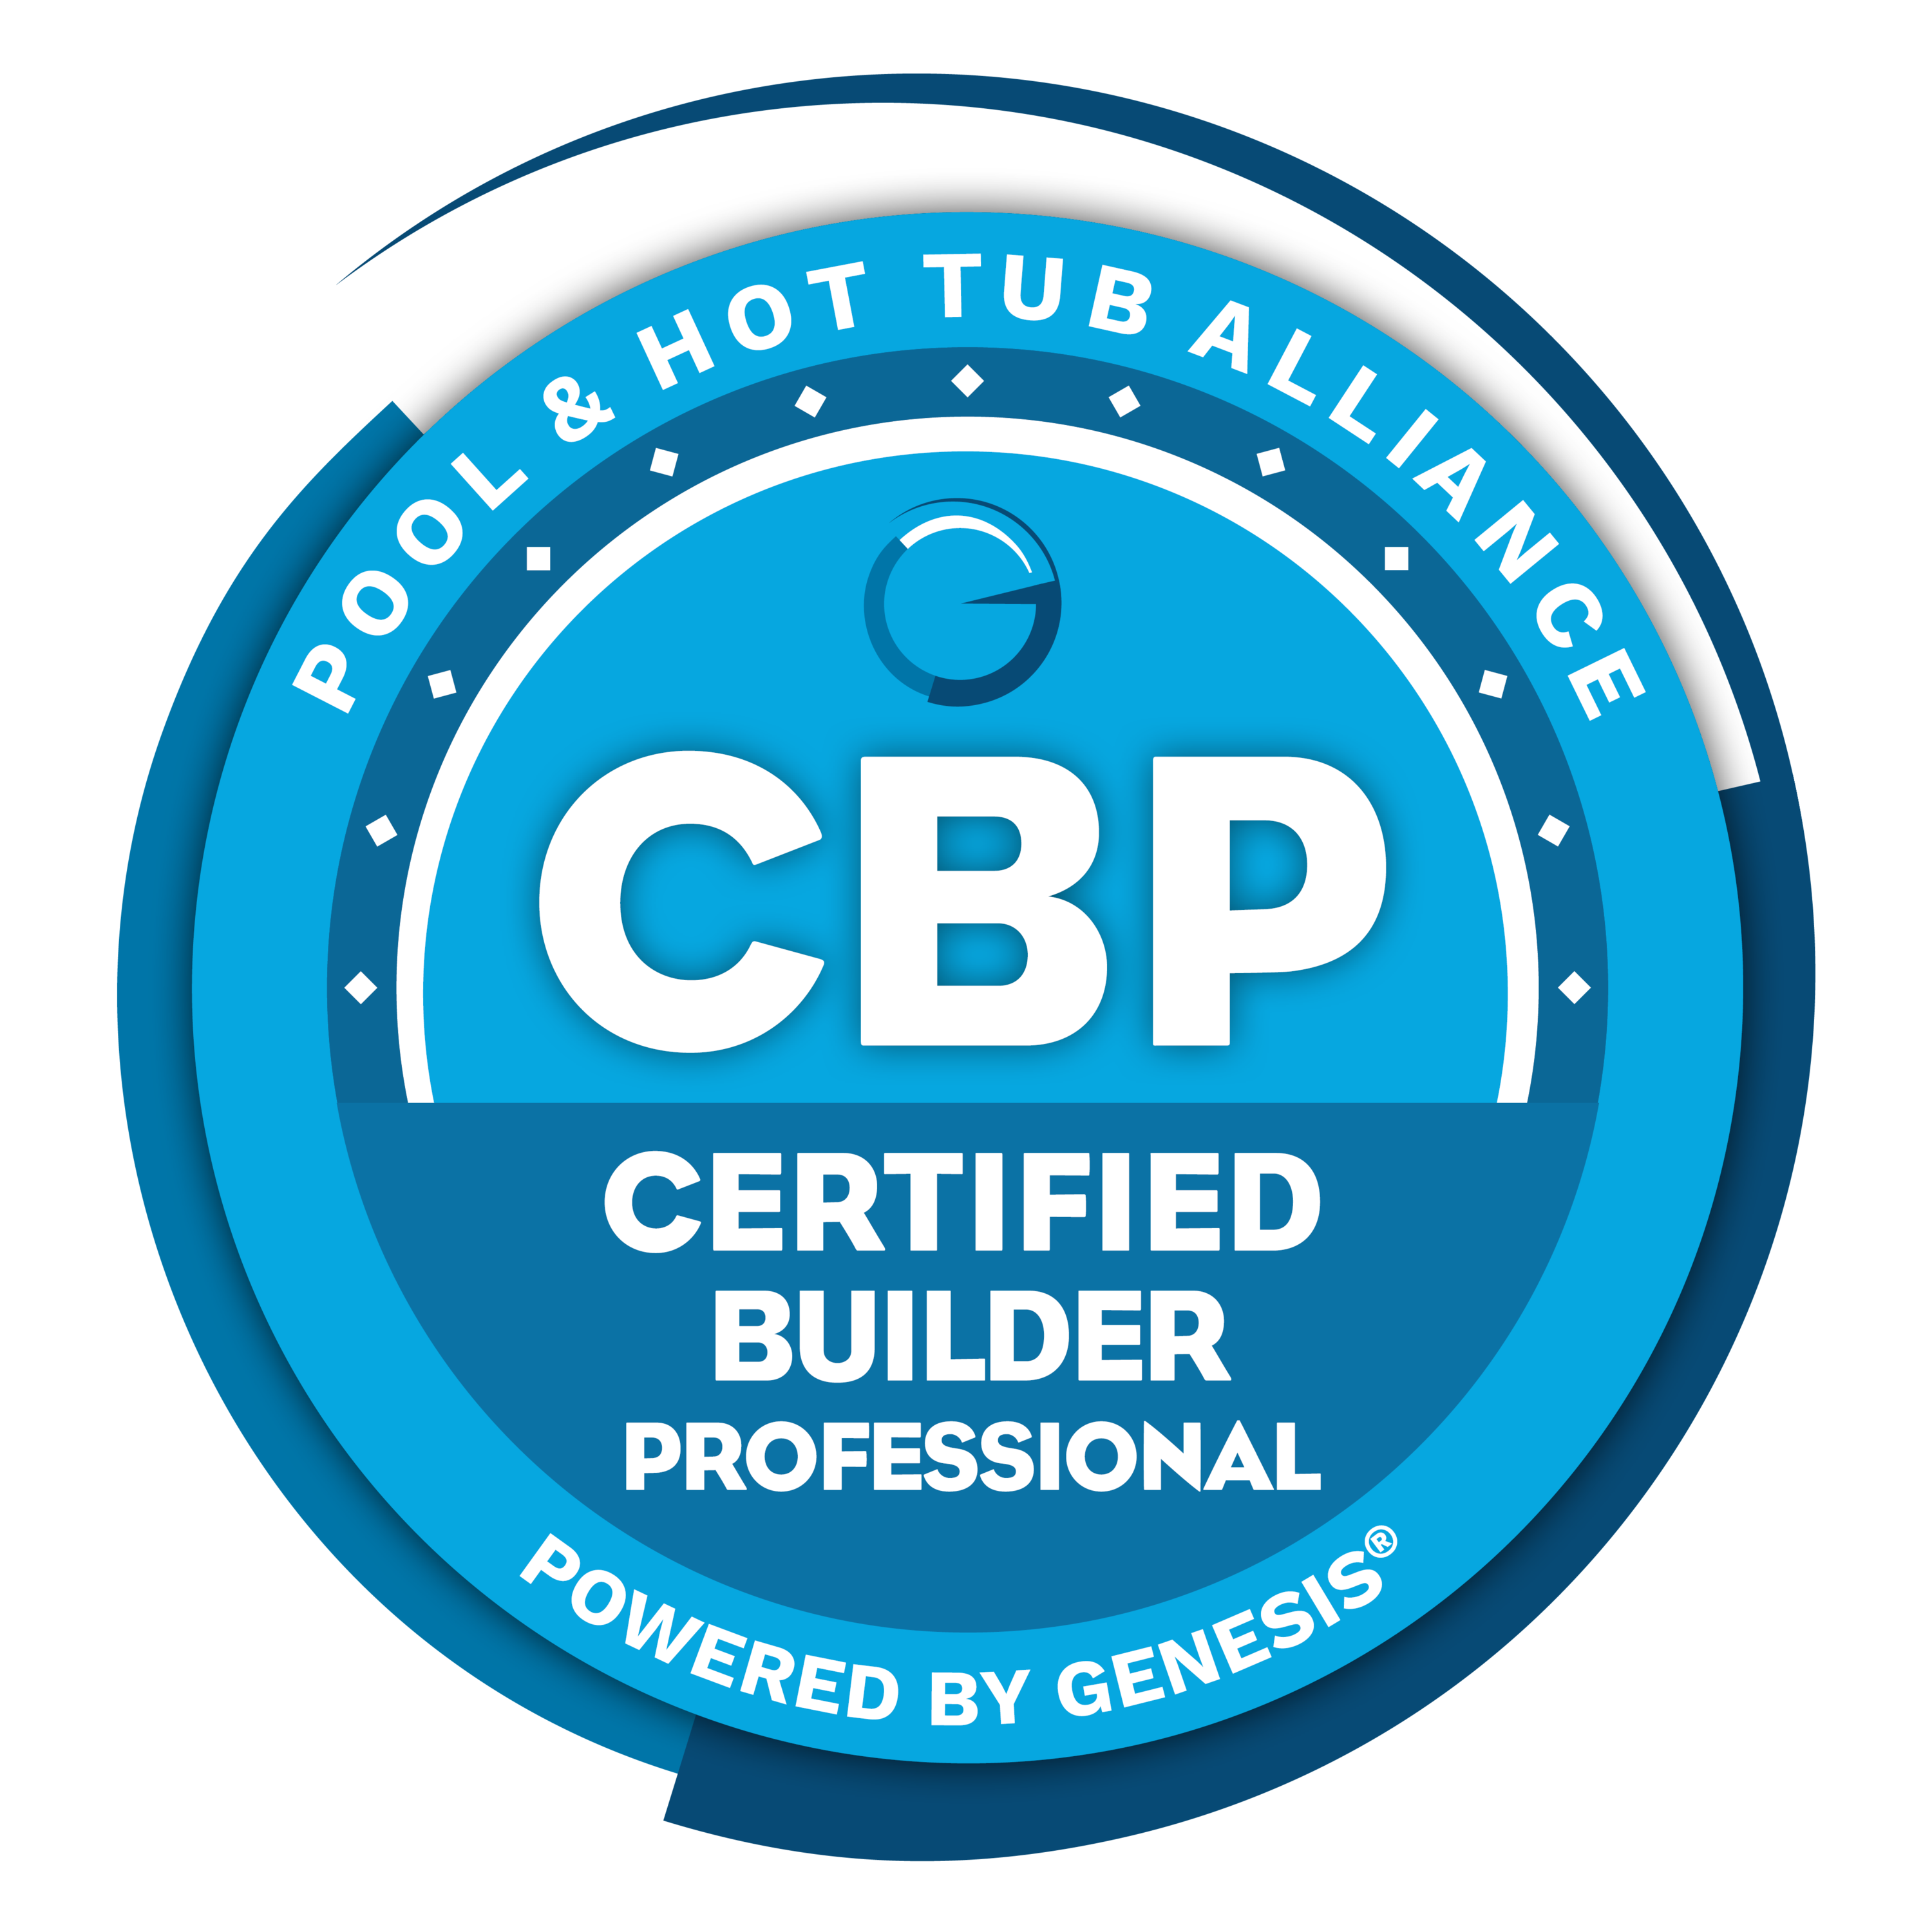 Certified Builder Professional